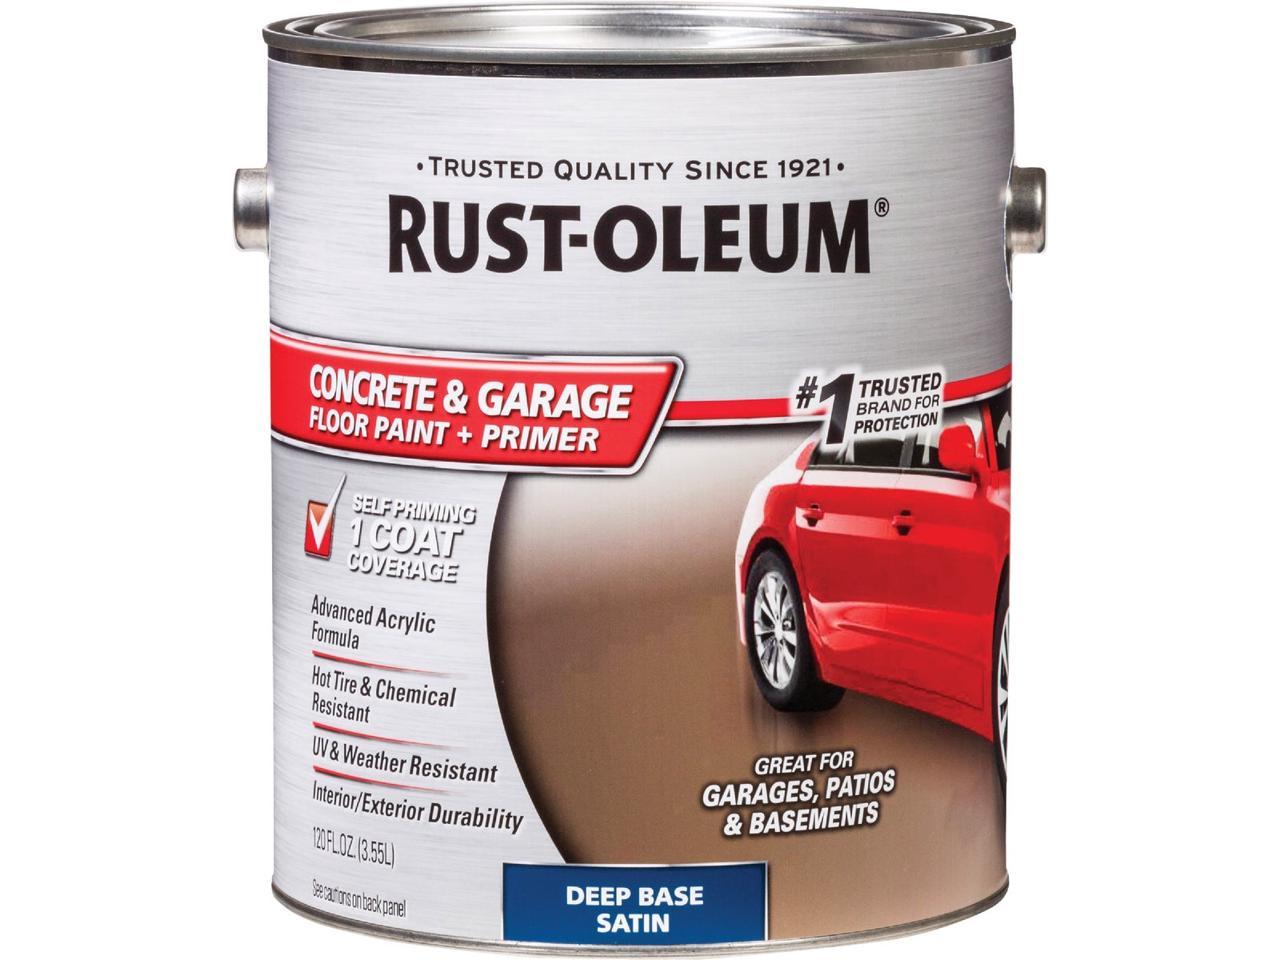 RustOleum Concrete & Garage Floor Paint & Primer, 1 Gal., Deep Base 319550